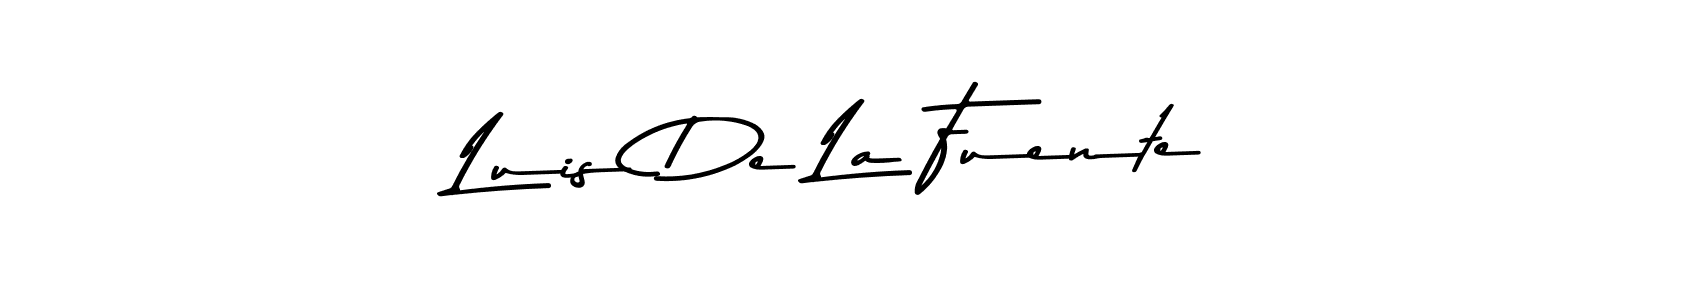 Check out images of Autograph of Luis De La Fuente name. Actor Luis De La Fuente Signature Style. Asem Kandis PERSONAL USE is a professional sign style online. Luis De La Fuente signature style 9 images and pictures png